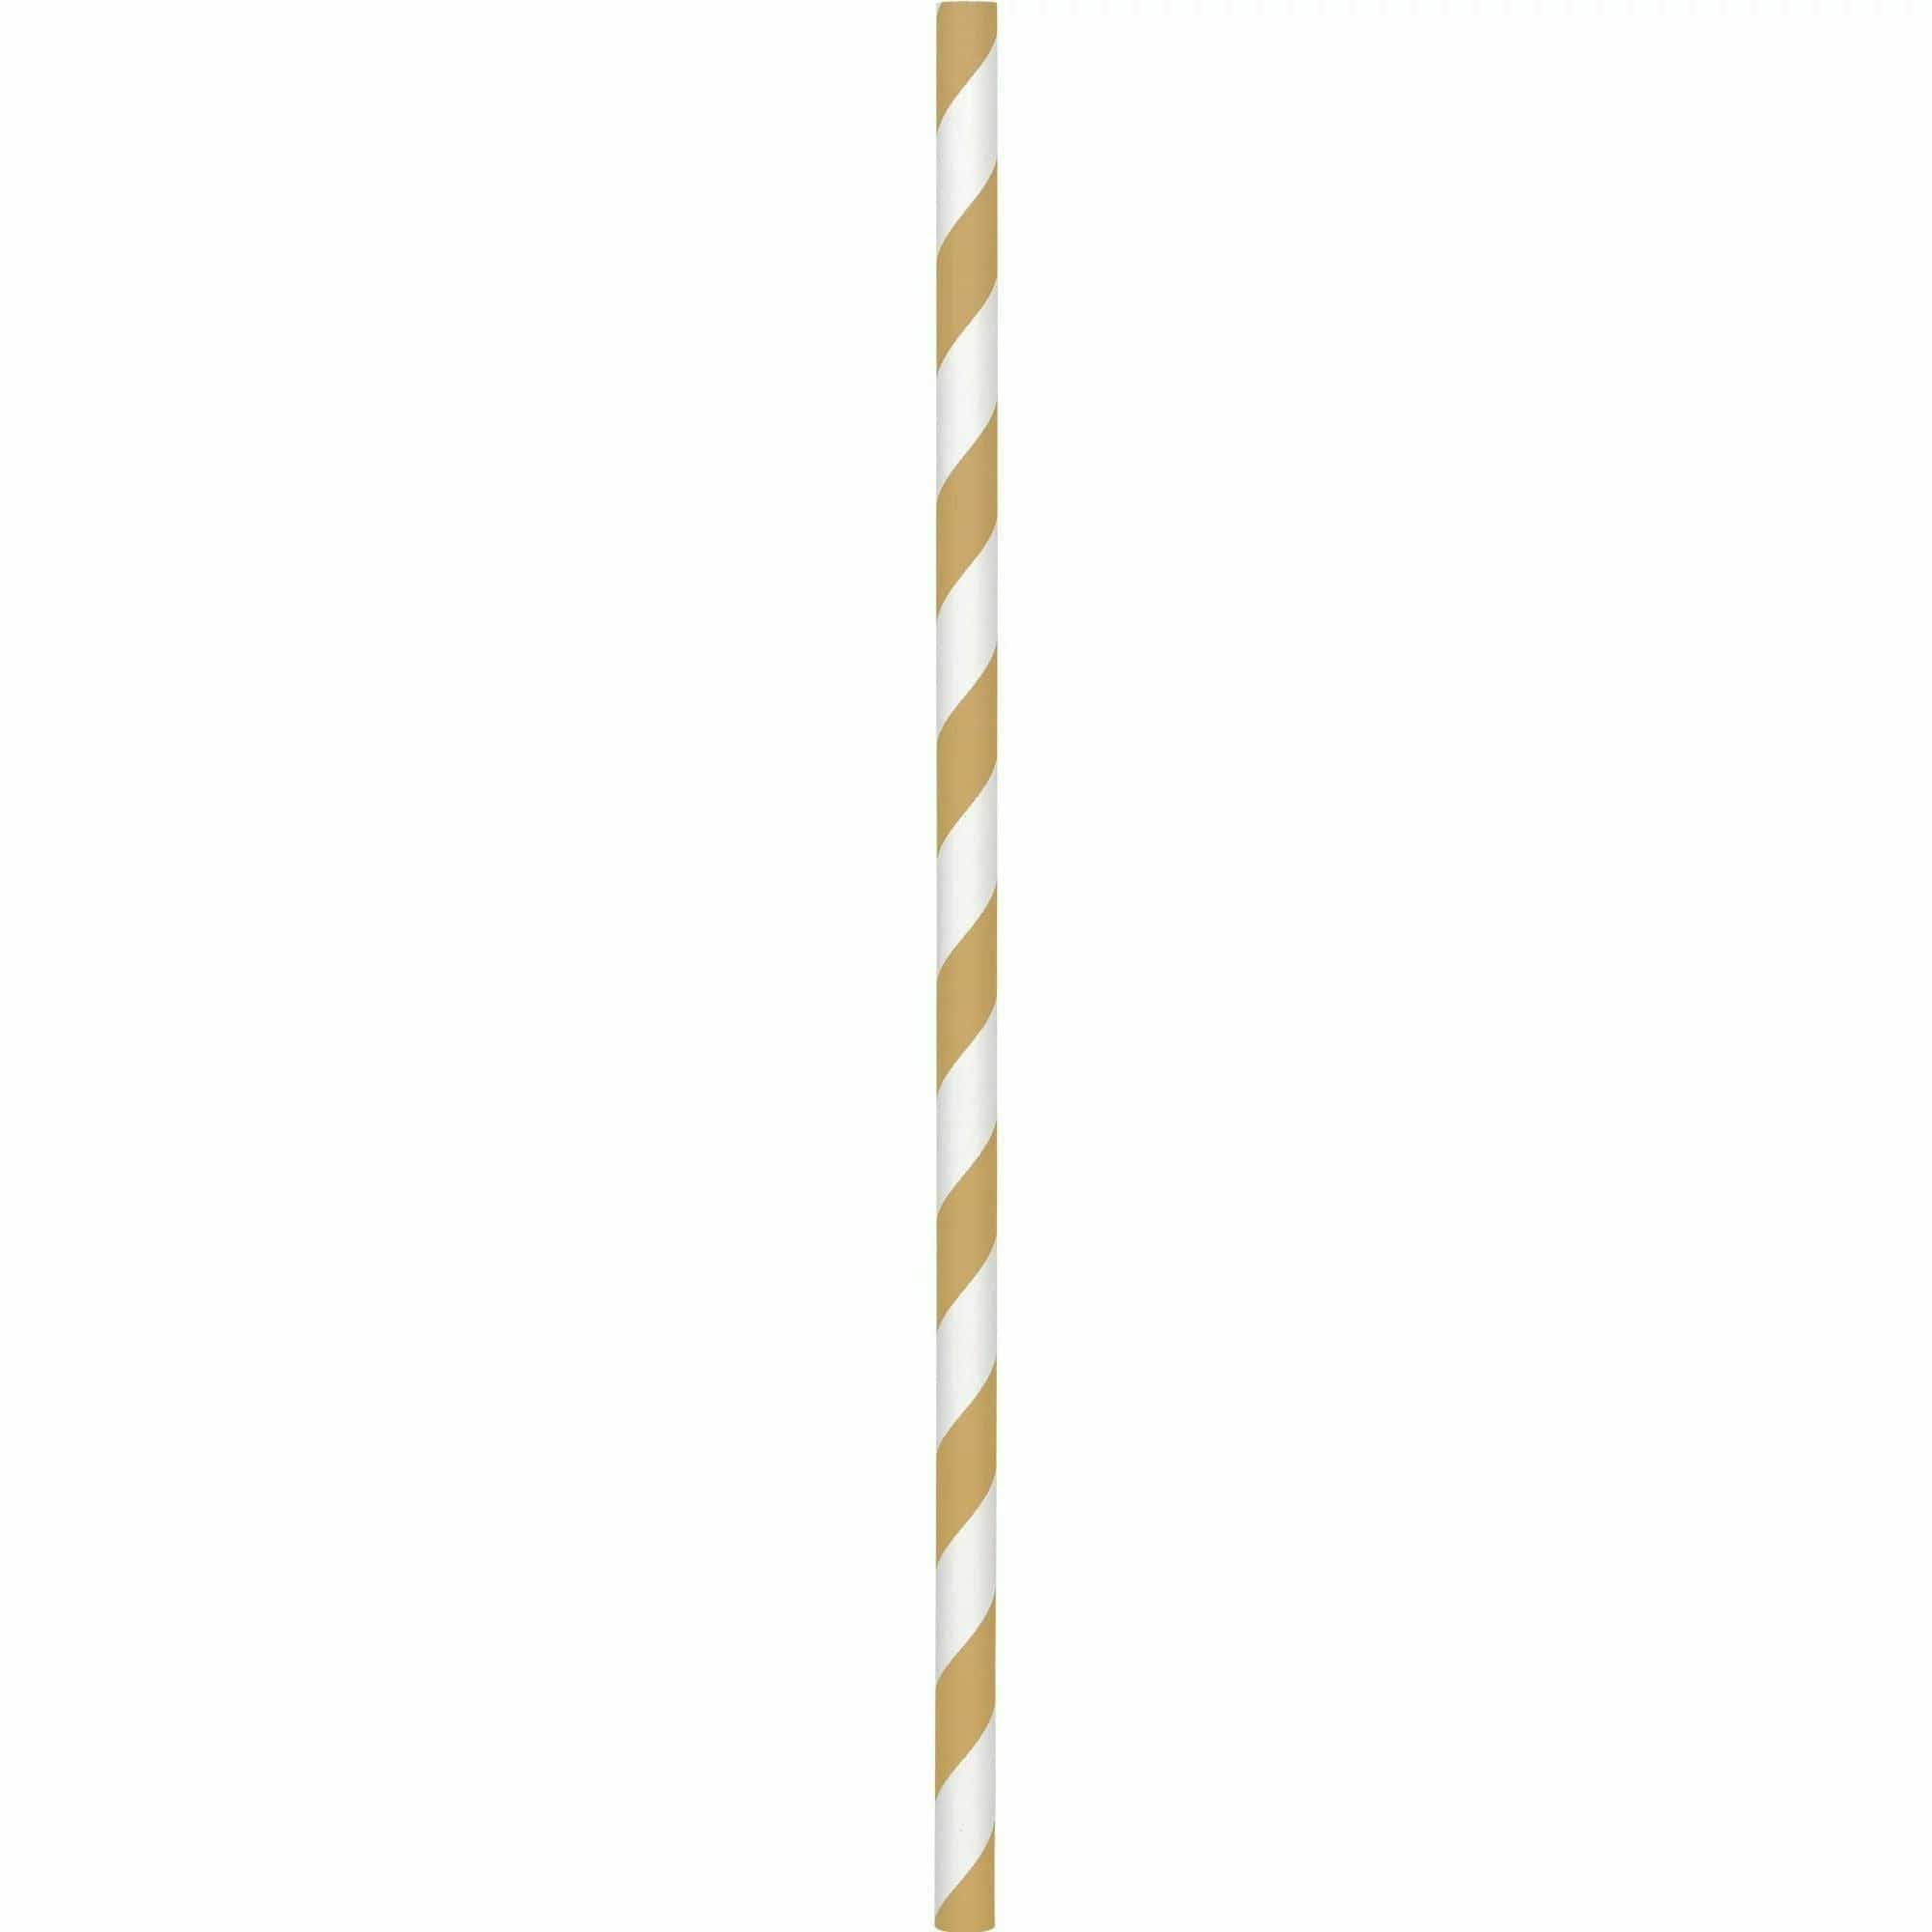 Amscan BASIC Gold - Paper Straws